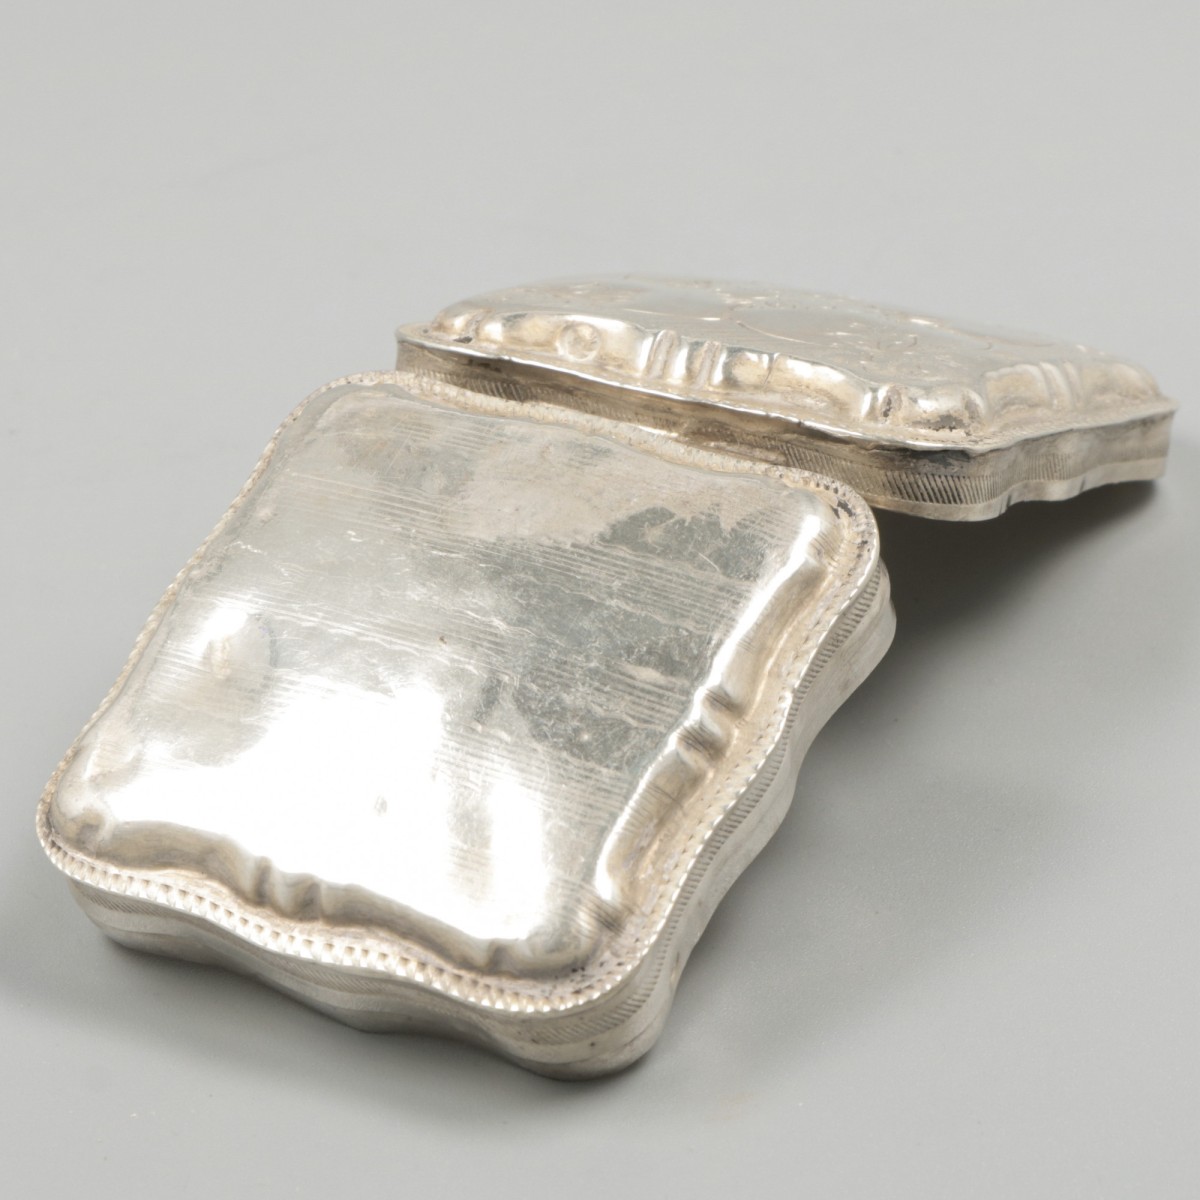 Peppermint box (Schoonhoven, Abraham van der Sluijs 1857-1881) silver. - Image 4 of 6